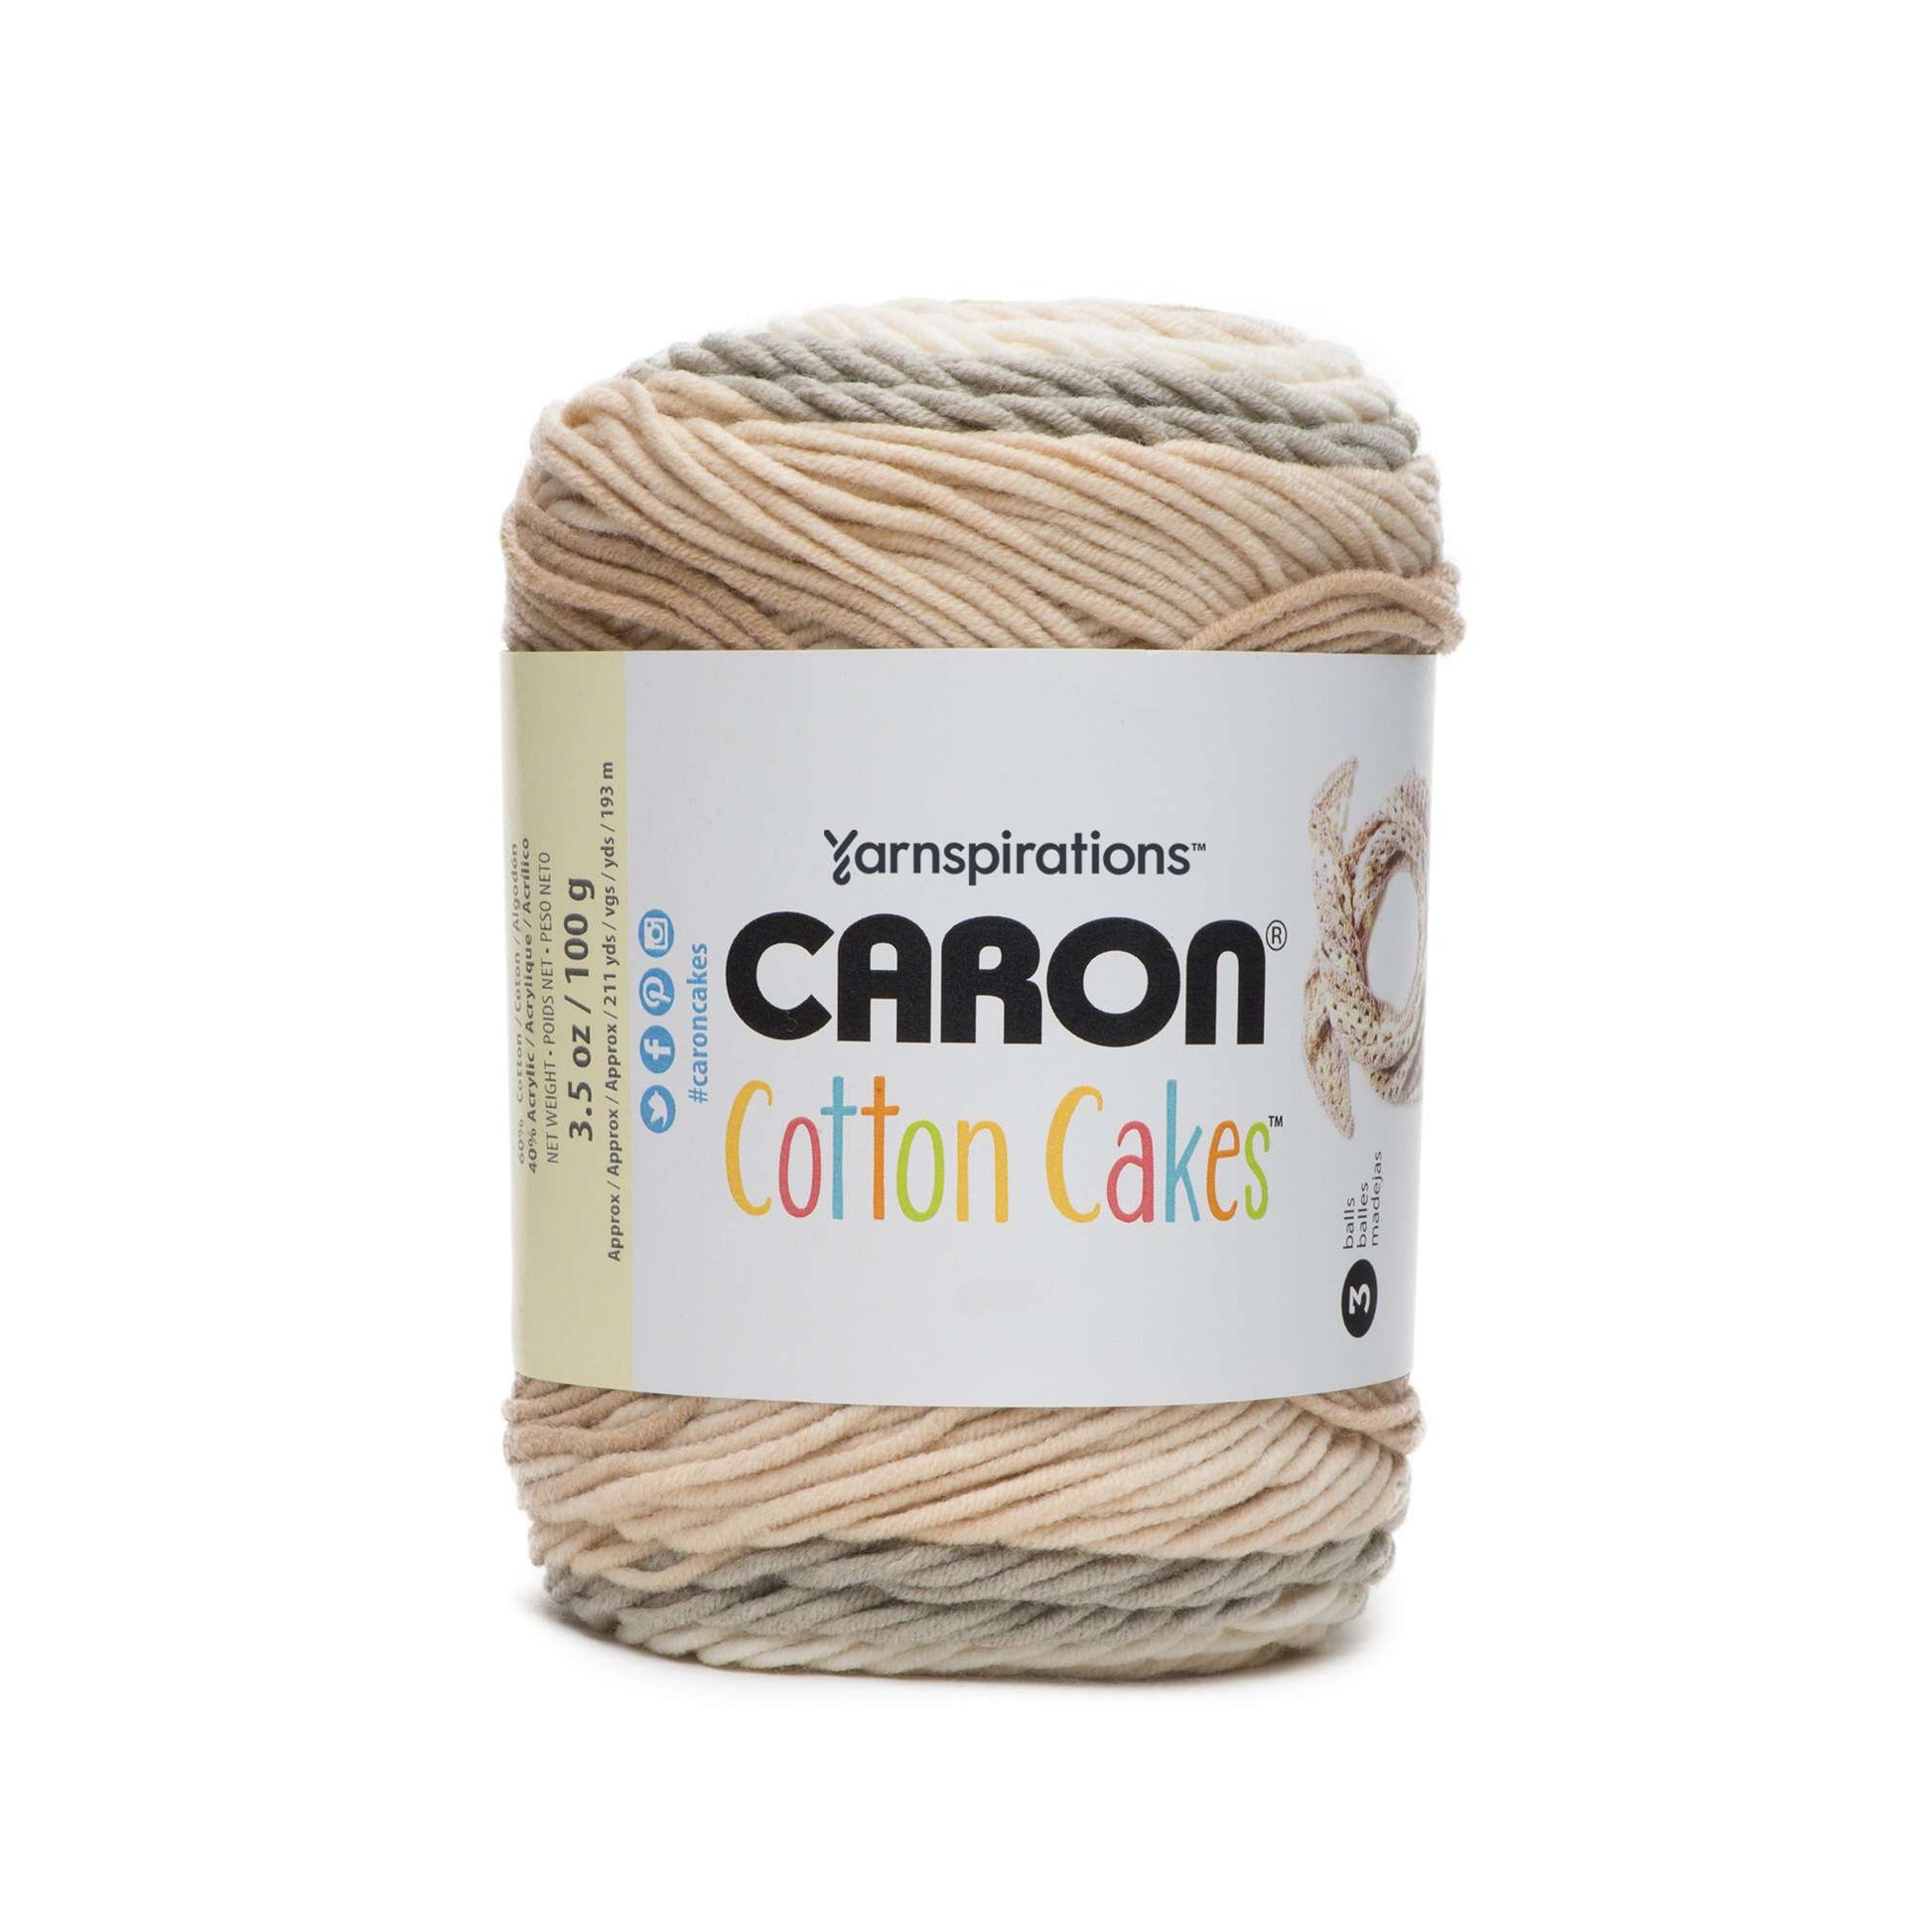 Caron Cotton Cakes Yarn, Retailer Exclusive